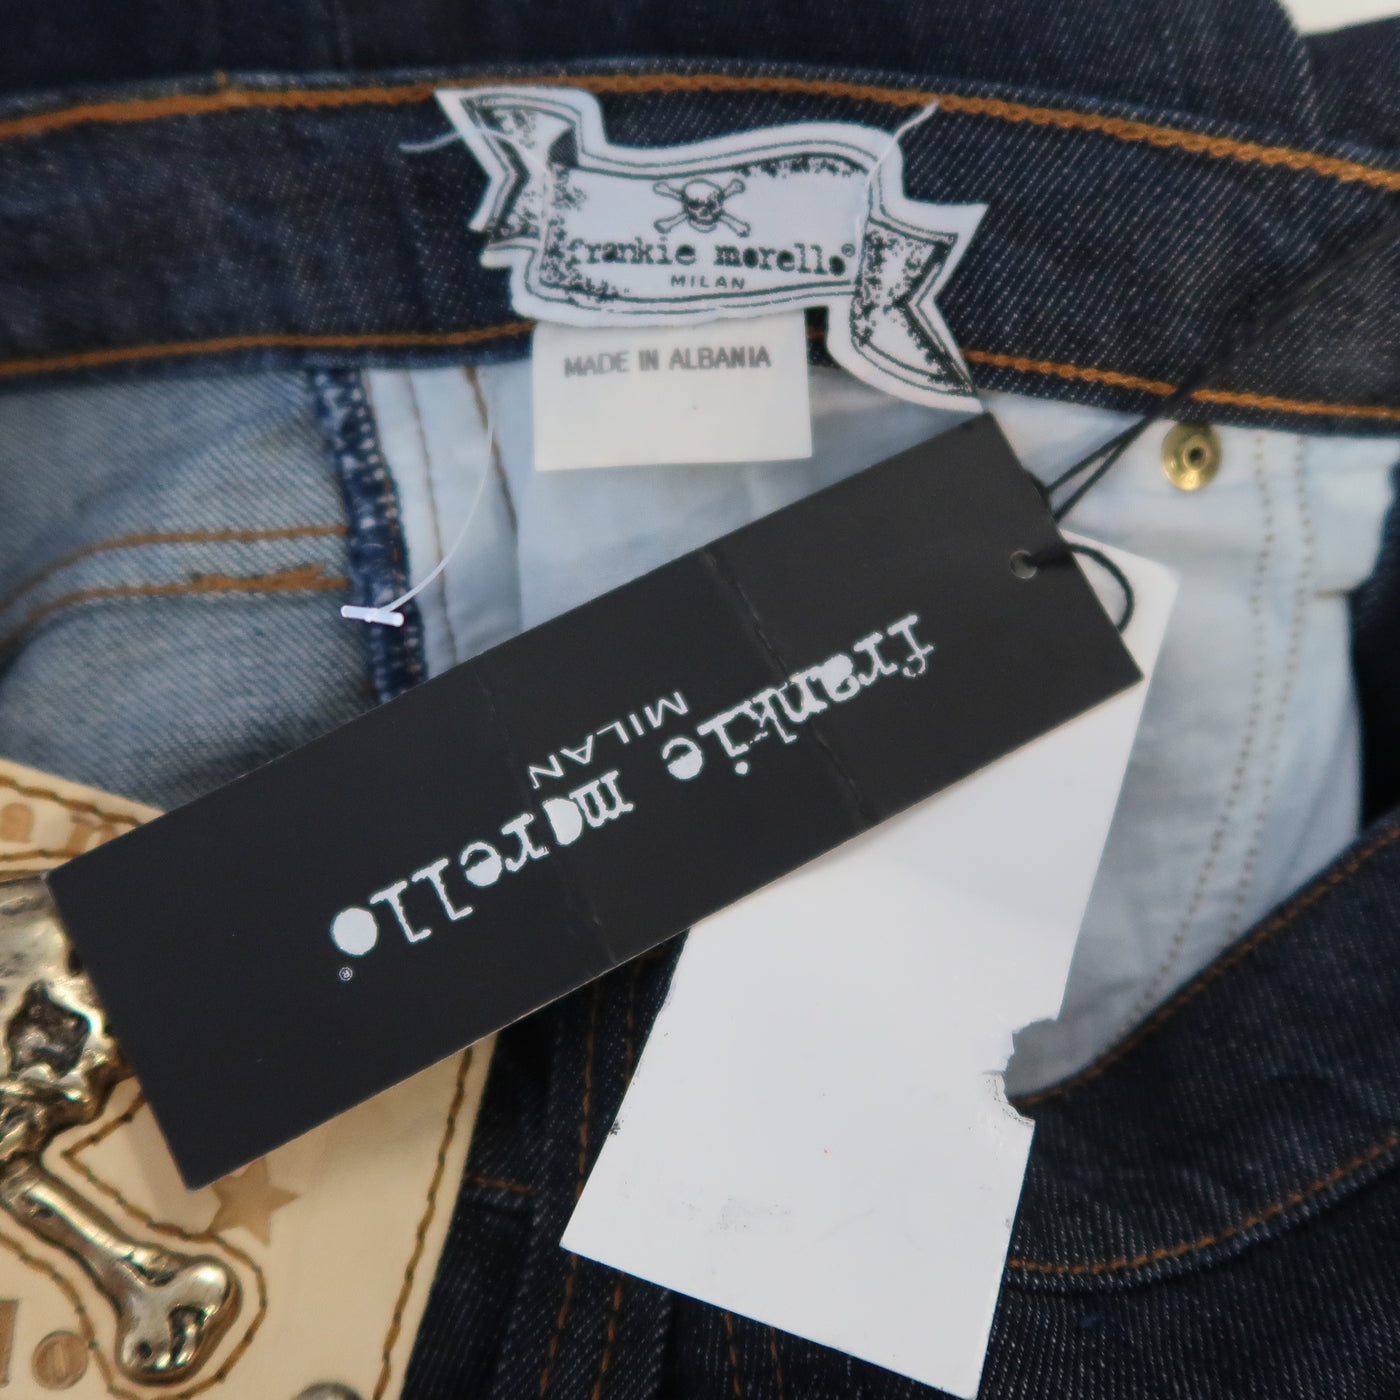 FRANKIE MORELLO 30 Indigo Contrast Stitch Denim Gold Skull Crossbones Stud Jeans